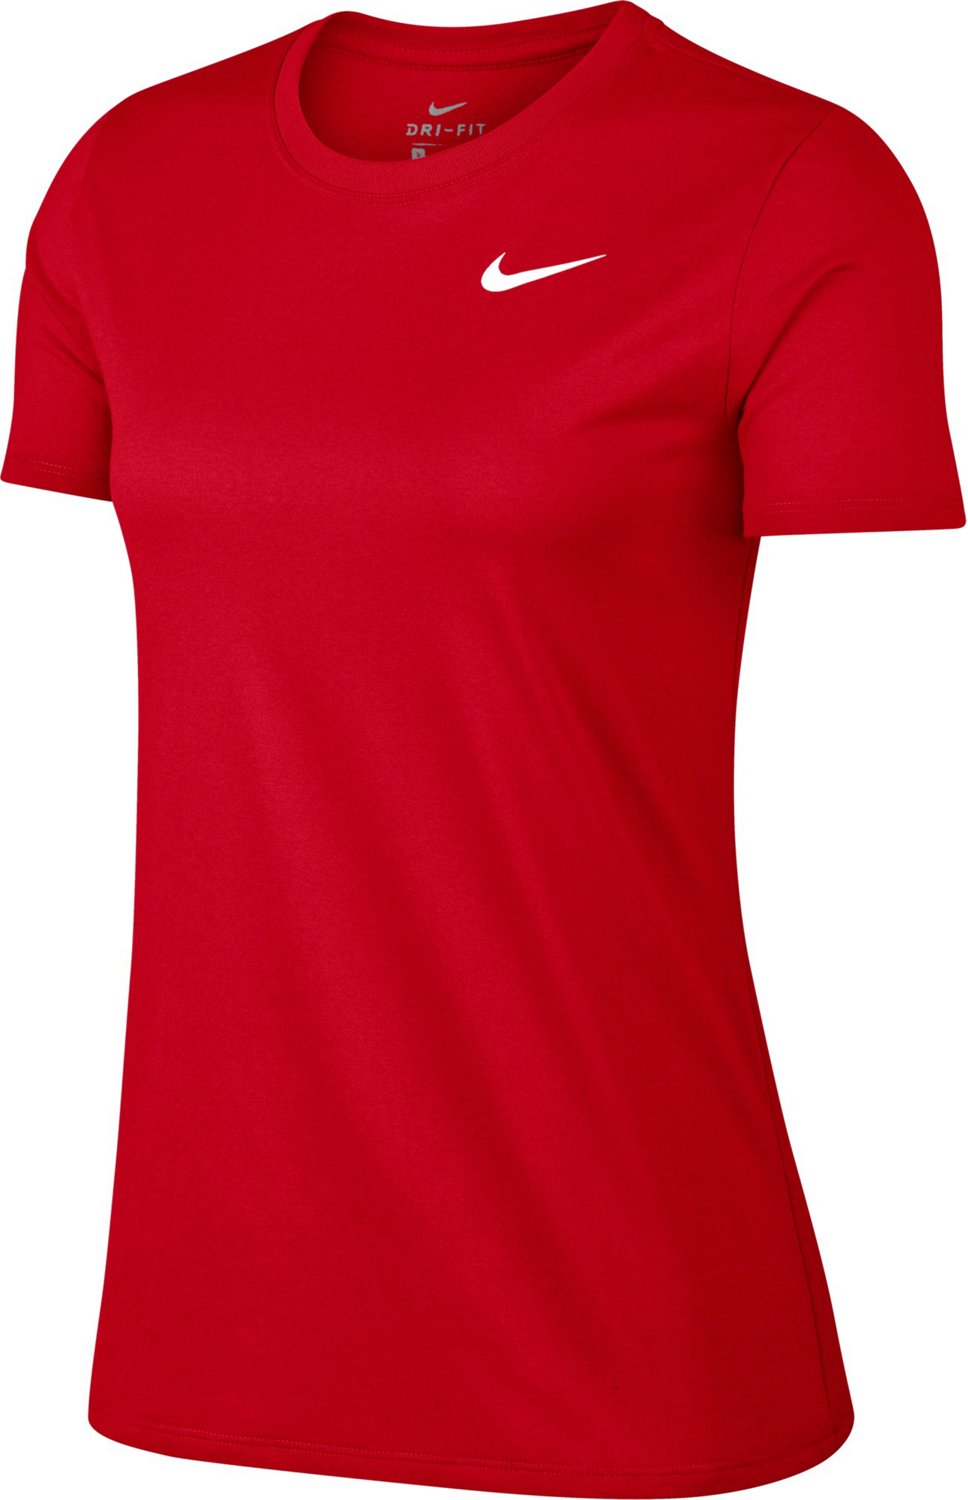 red nike shirts for women